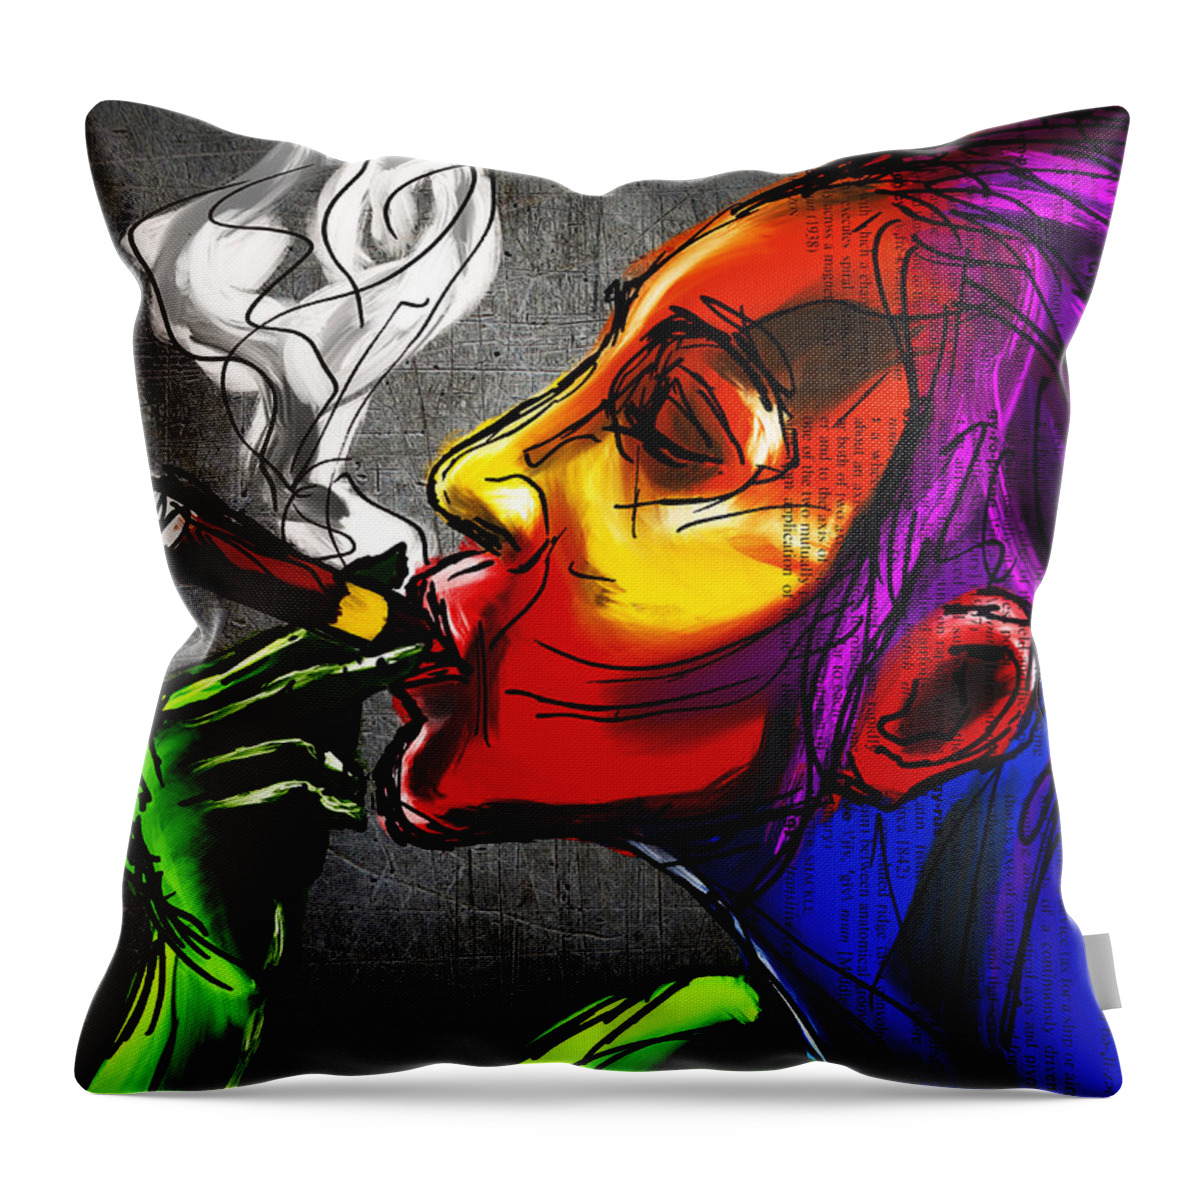 Portrait Throw Pillow featuring the digital art Dark Smoke by Michael Kallstrom